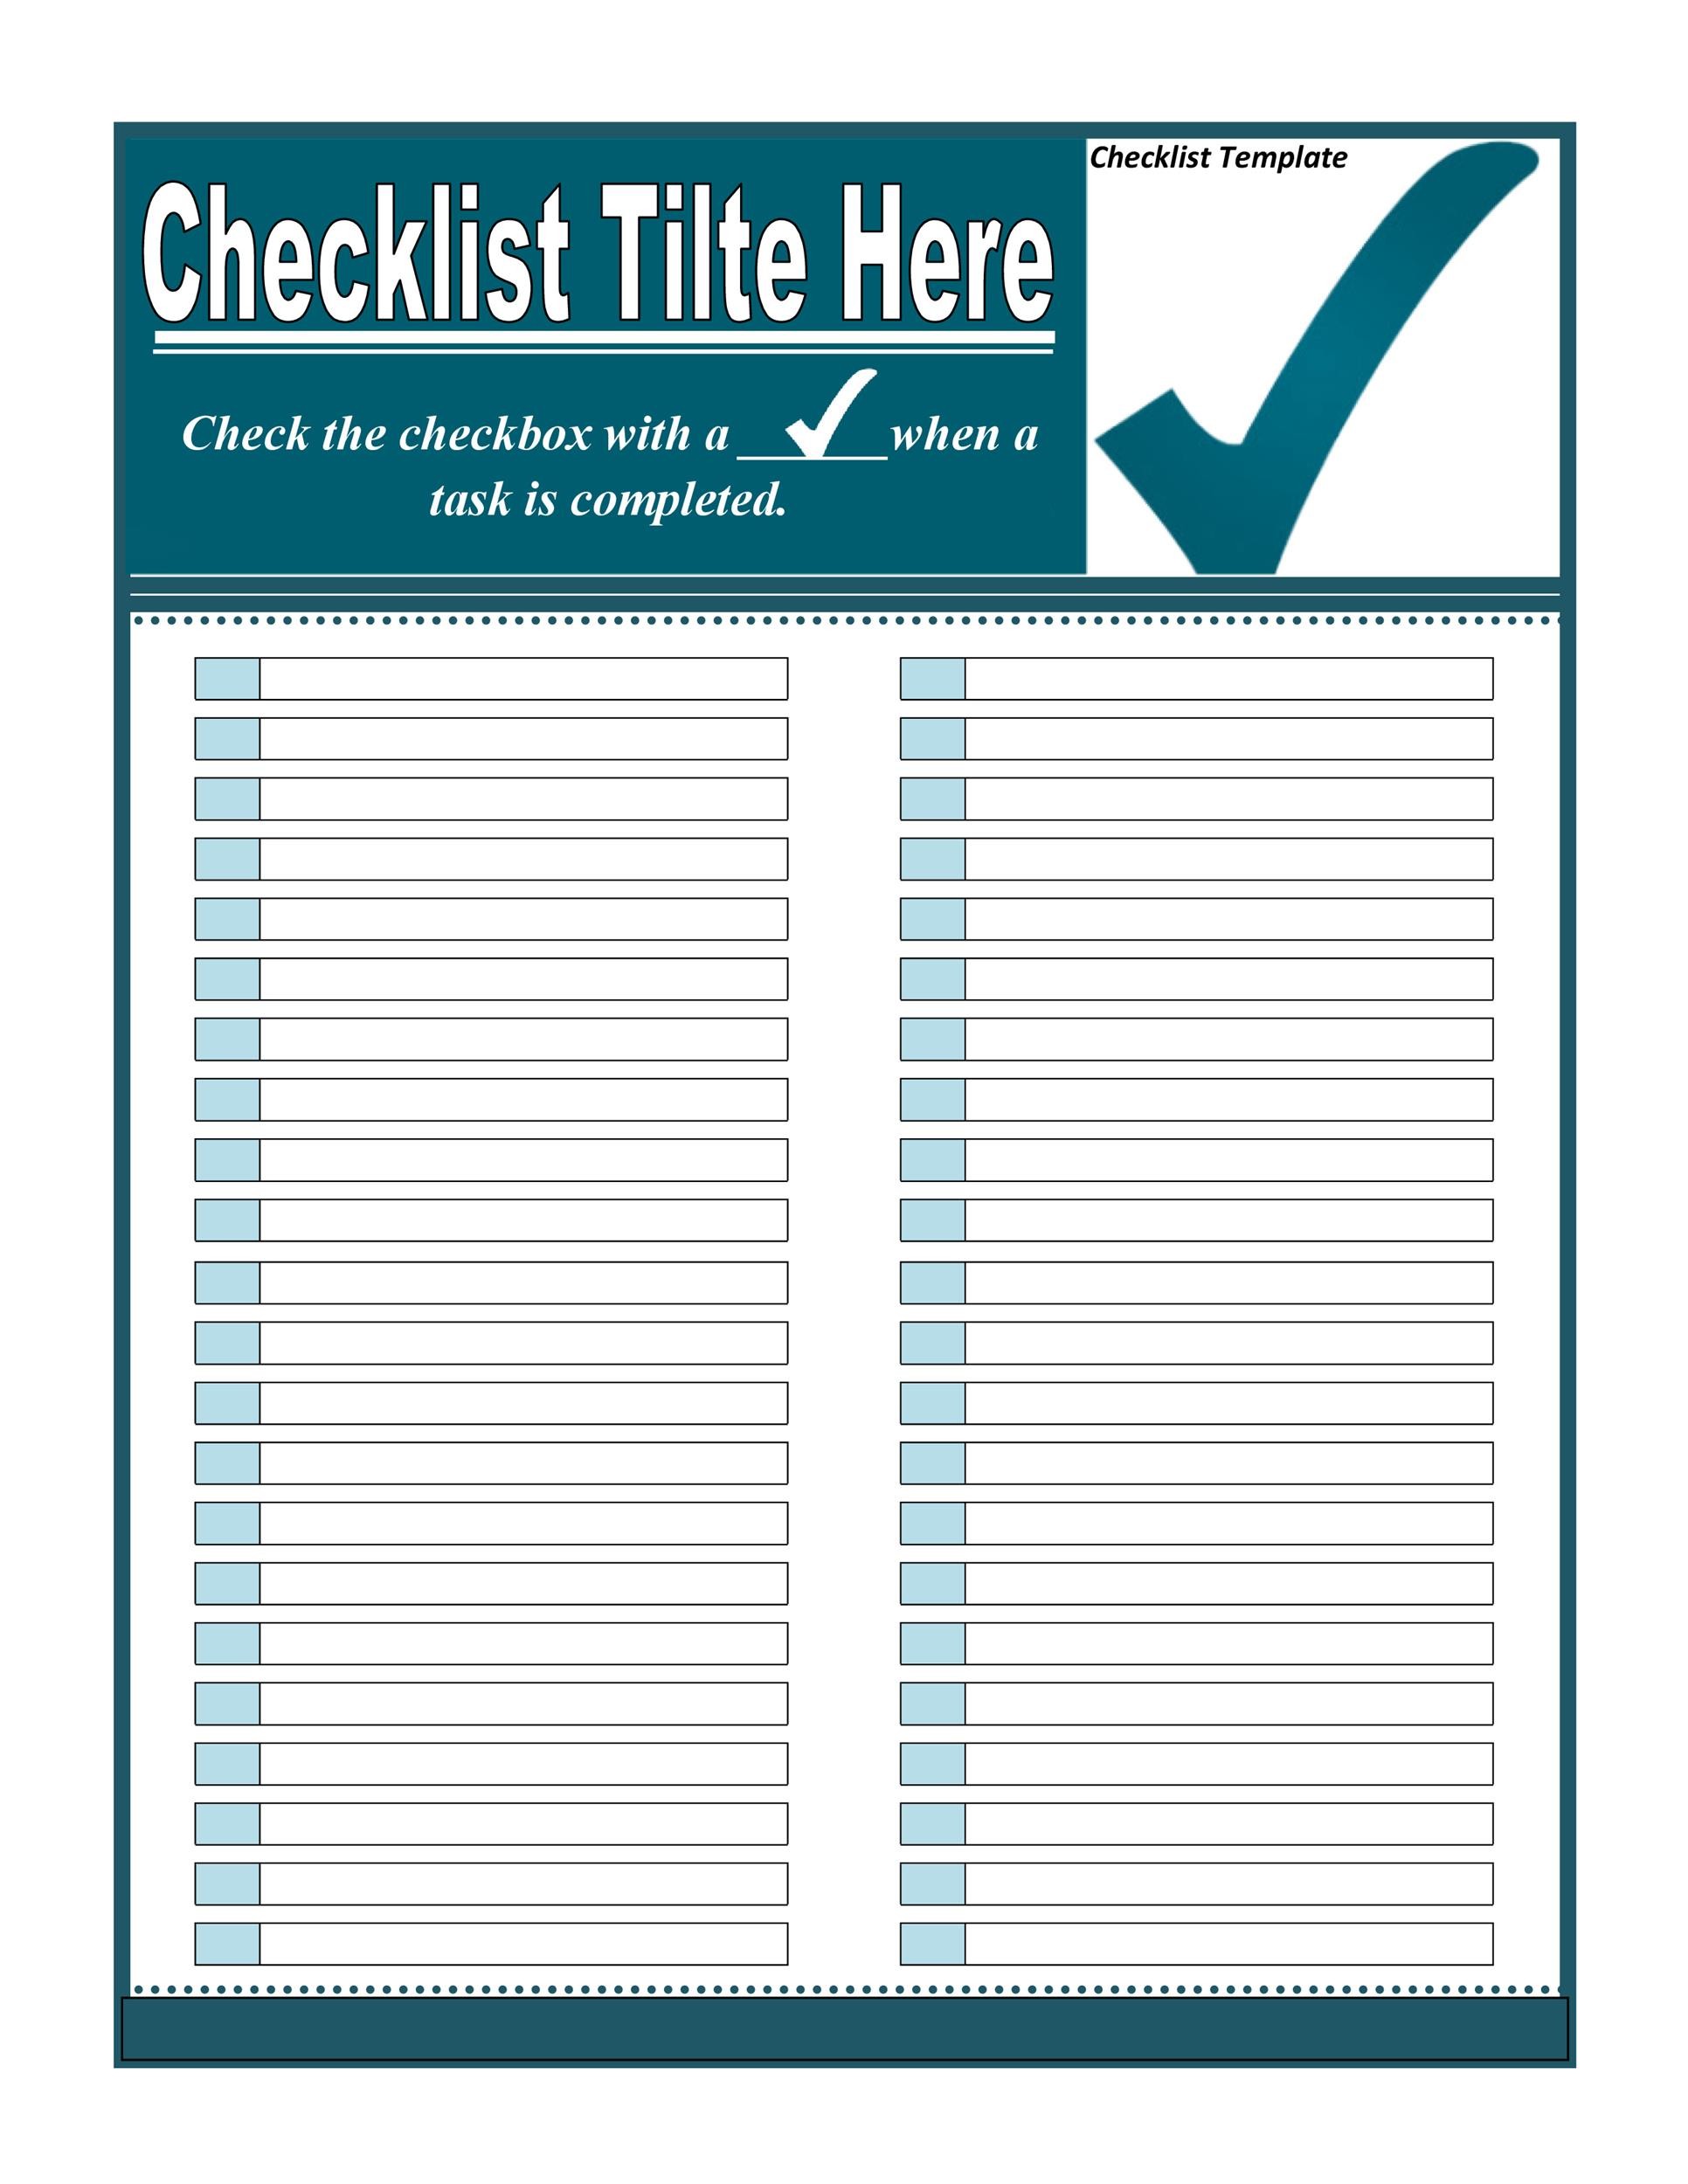 Free Checklist Template Word Of Checklist Template Word ASKxz